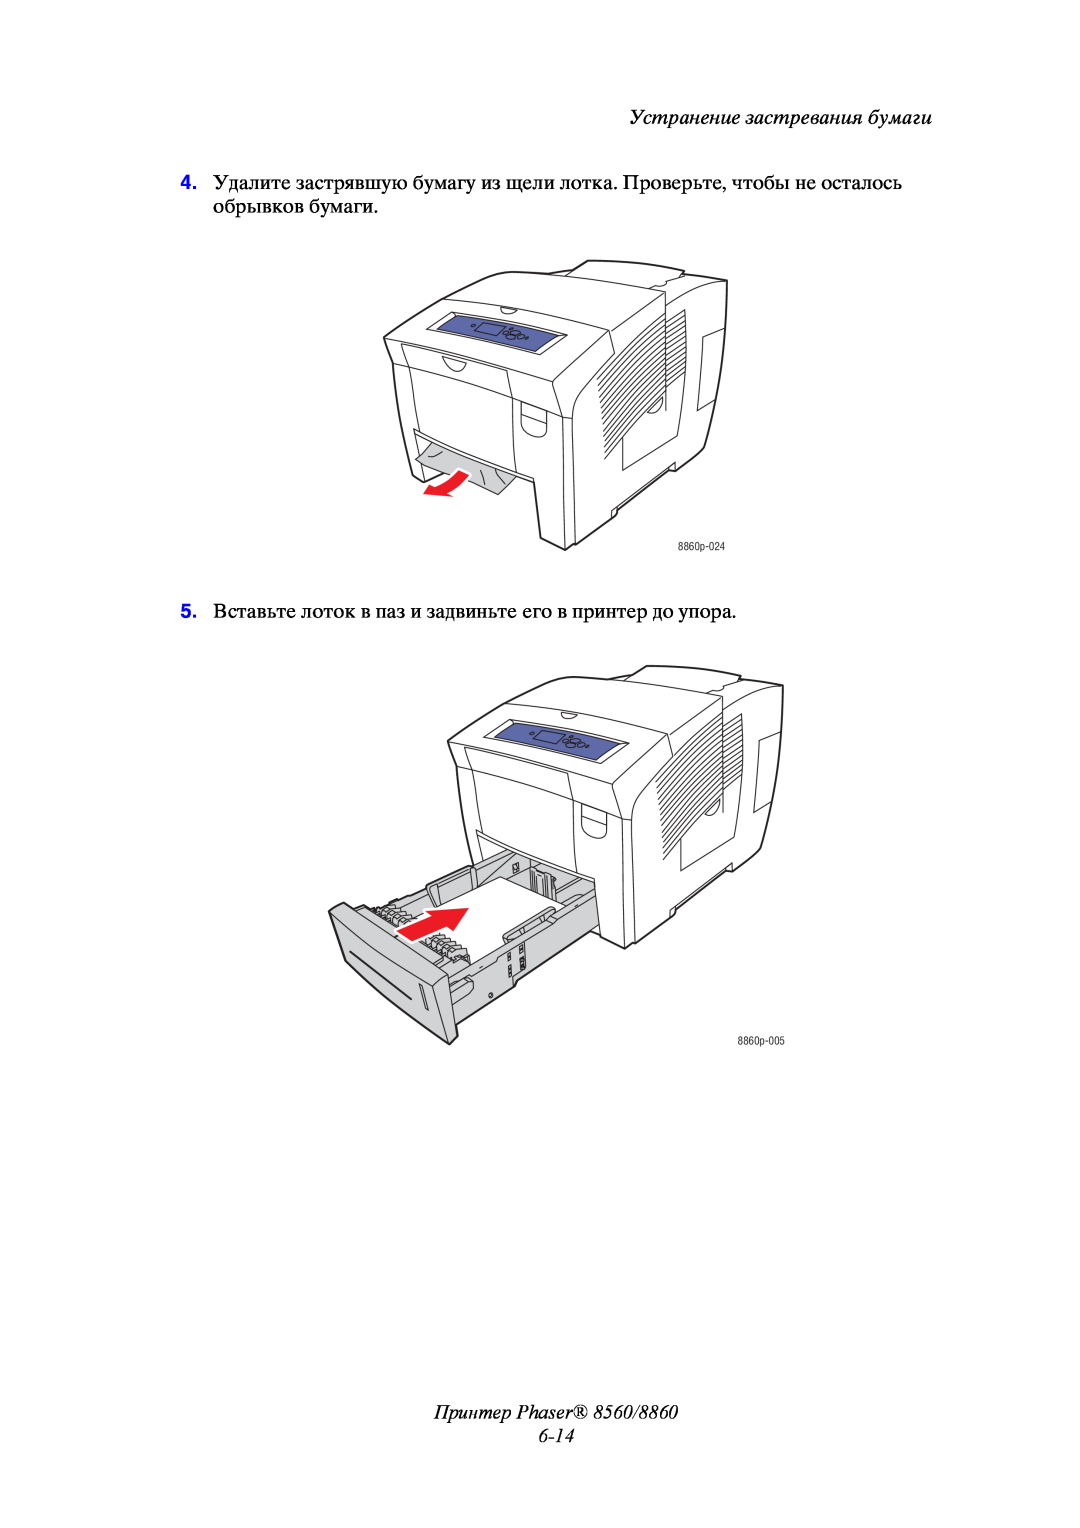 Xerox manual Принтер Phaser 8560/8860 6-14, Устранение застревания бумаги, 8860p-024, 8860p-005 